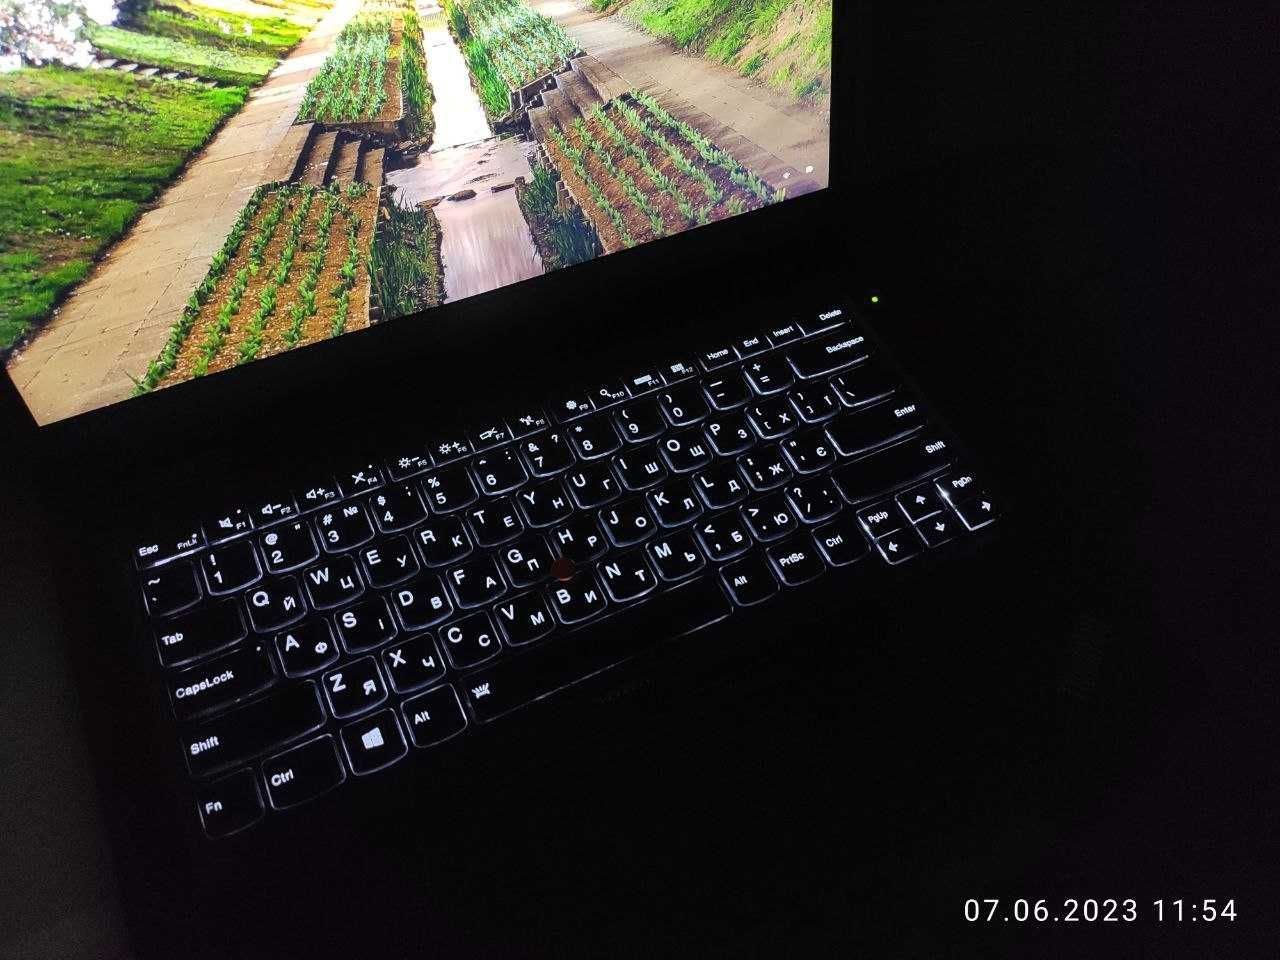 Ноутбук Lenovo ThinkPad X1 Carbon 4th 14" FHD i5-6300U RAM 8 / 256 SSD